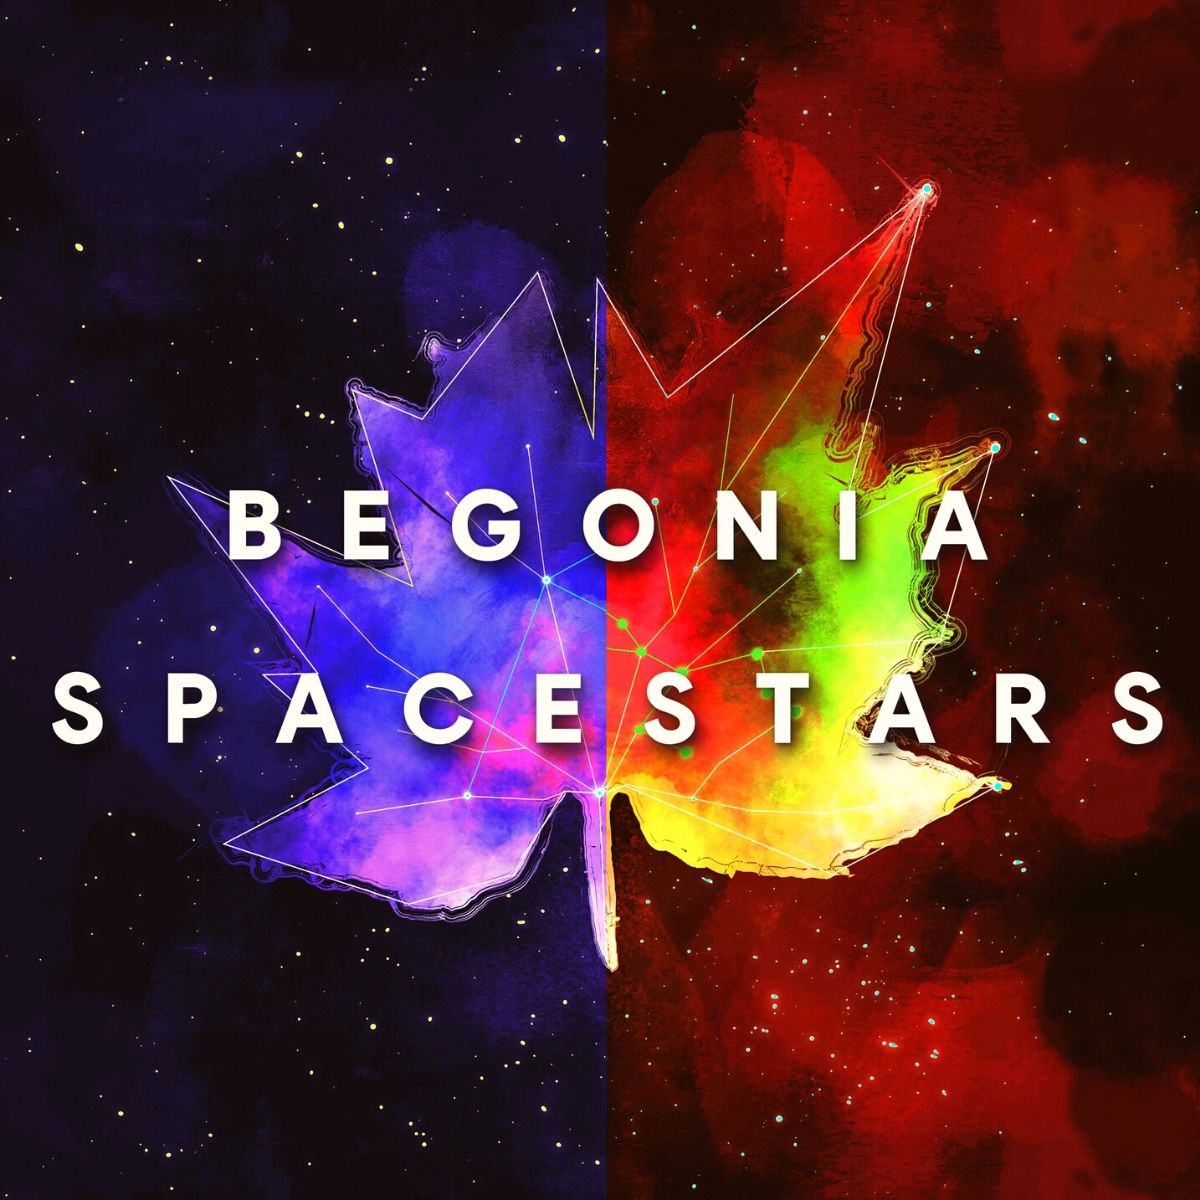 Begonia Spacestars Beekenkamp on Thursd